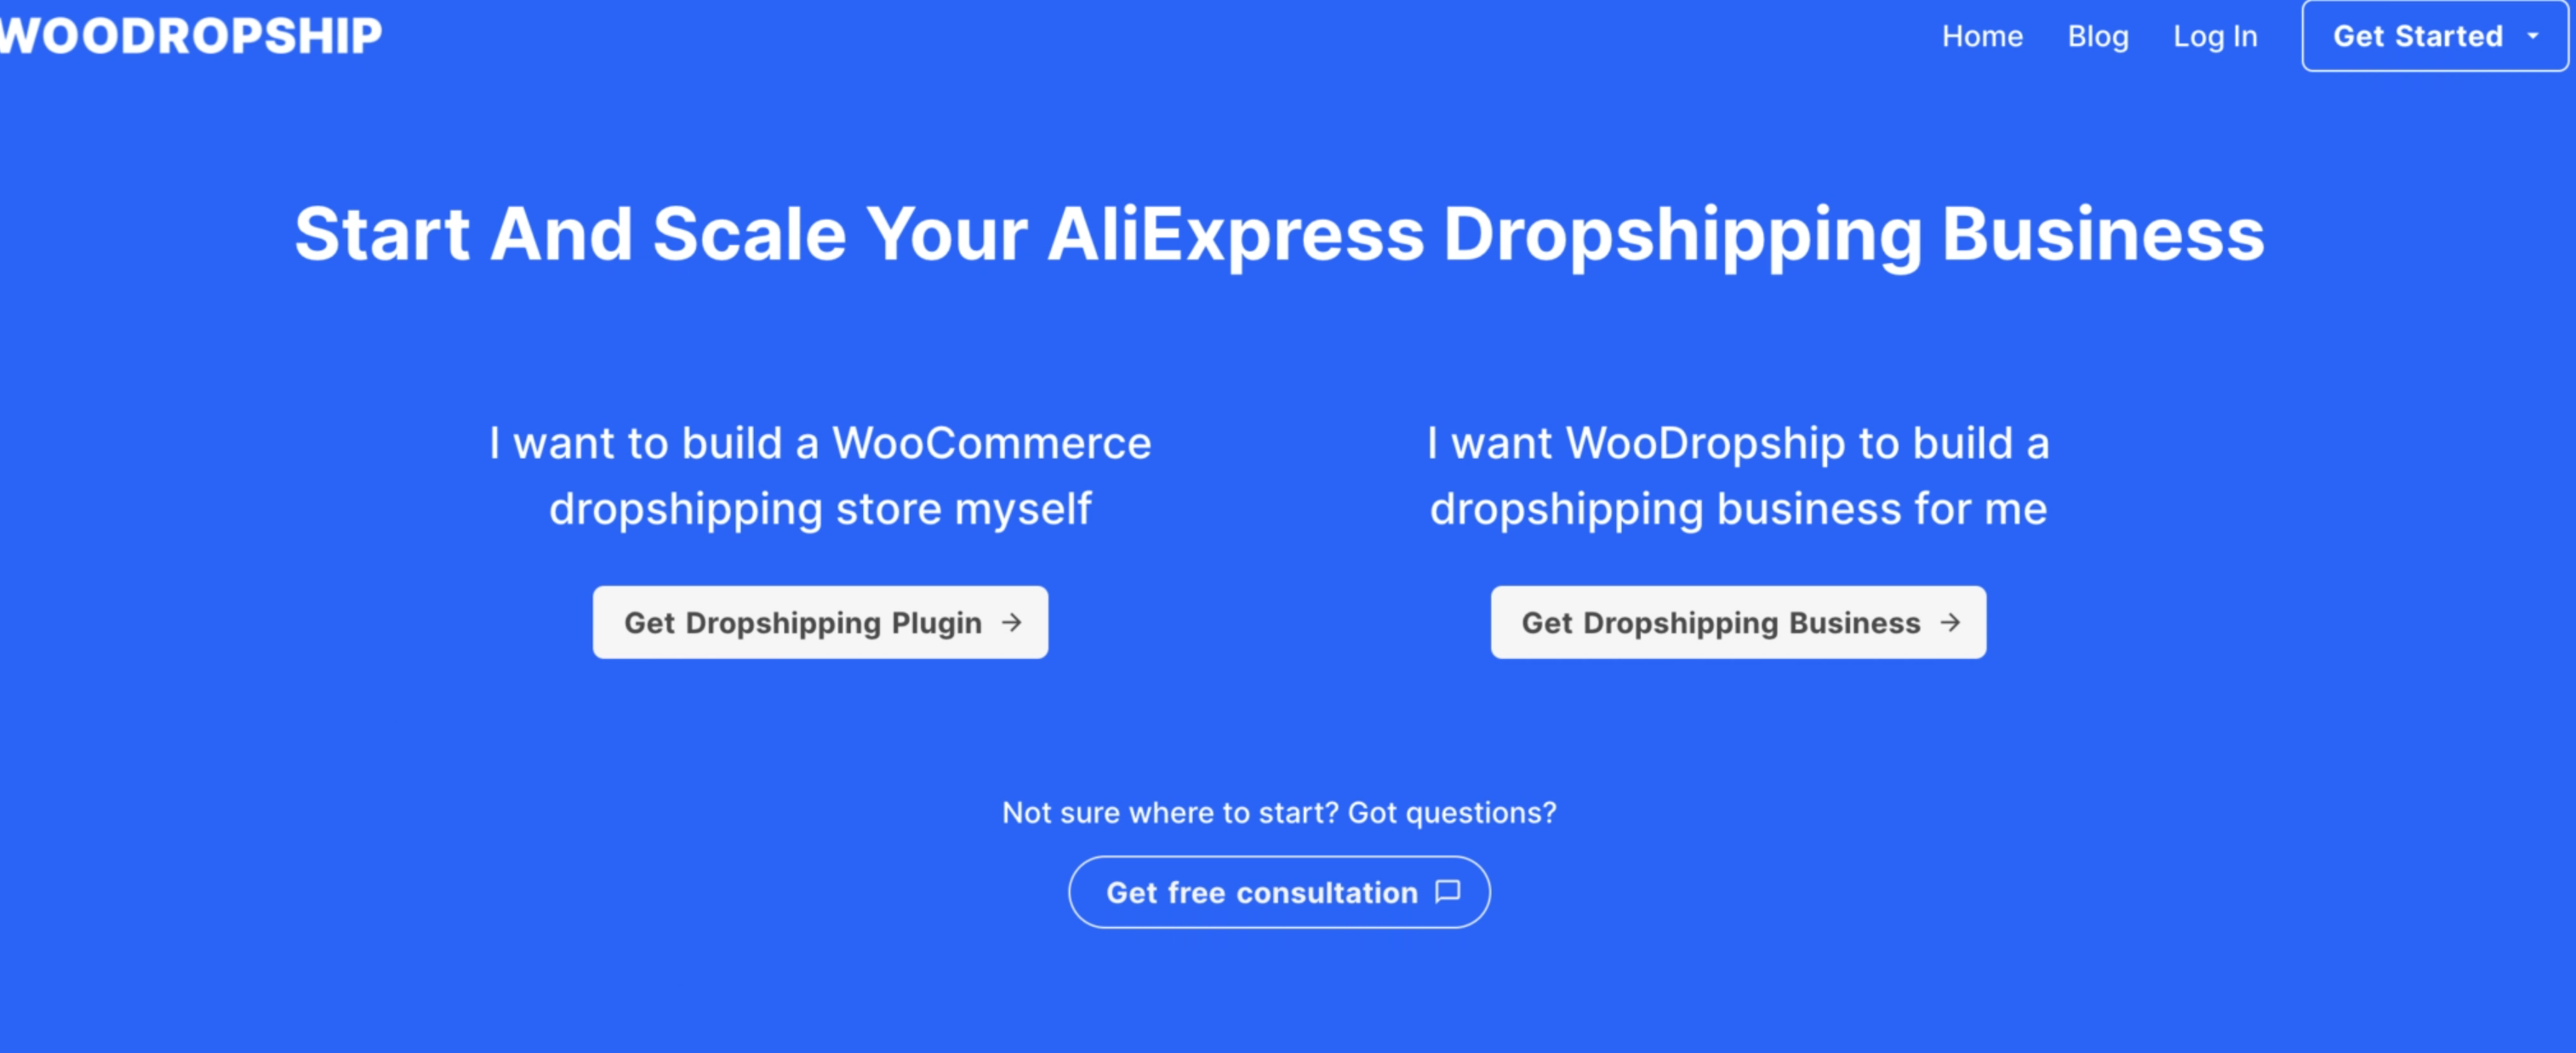 WooDropship - WooCommerce Dropshiiping plugin